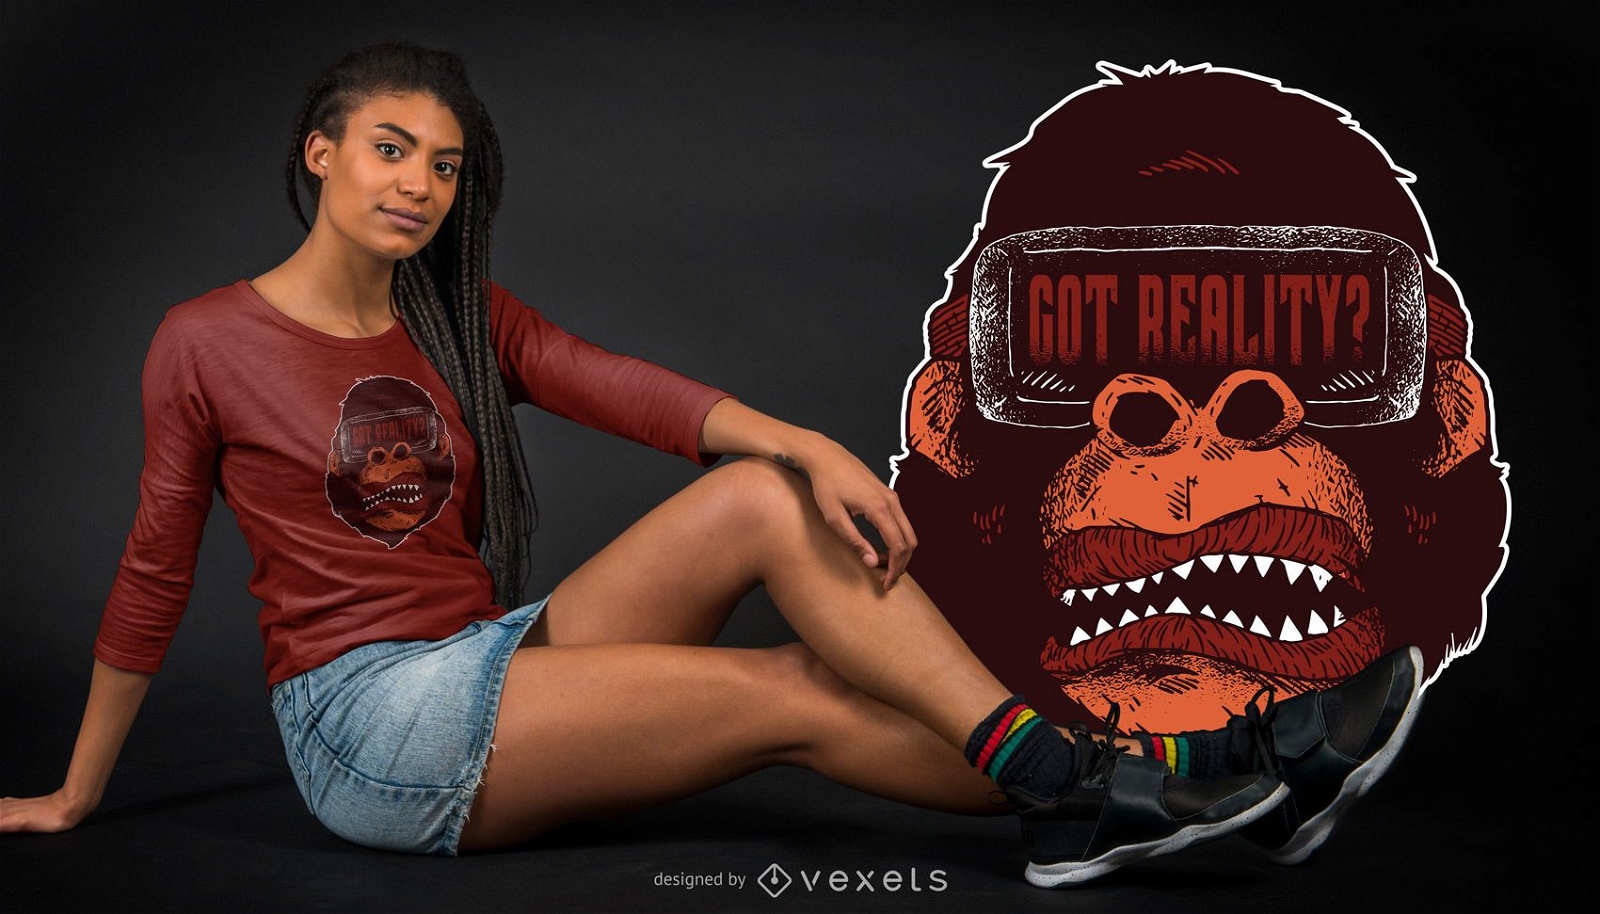 Design de t-shirt Gorilla reality